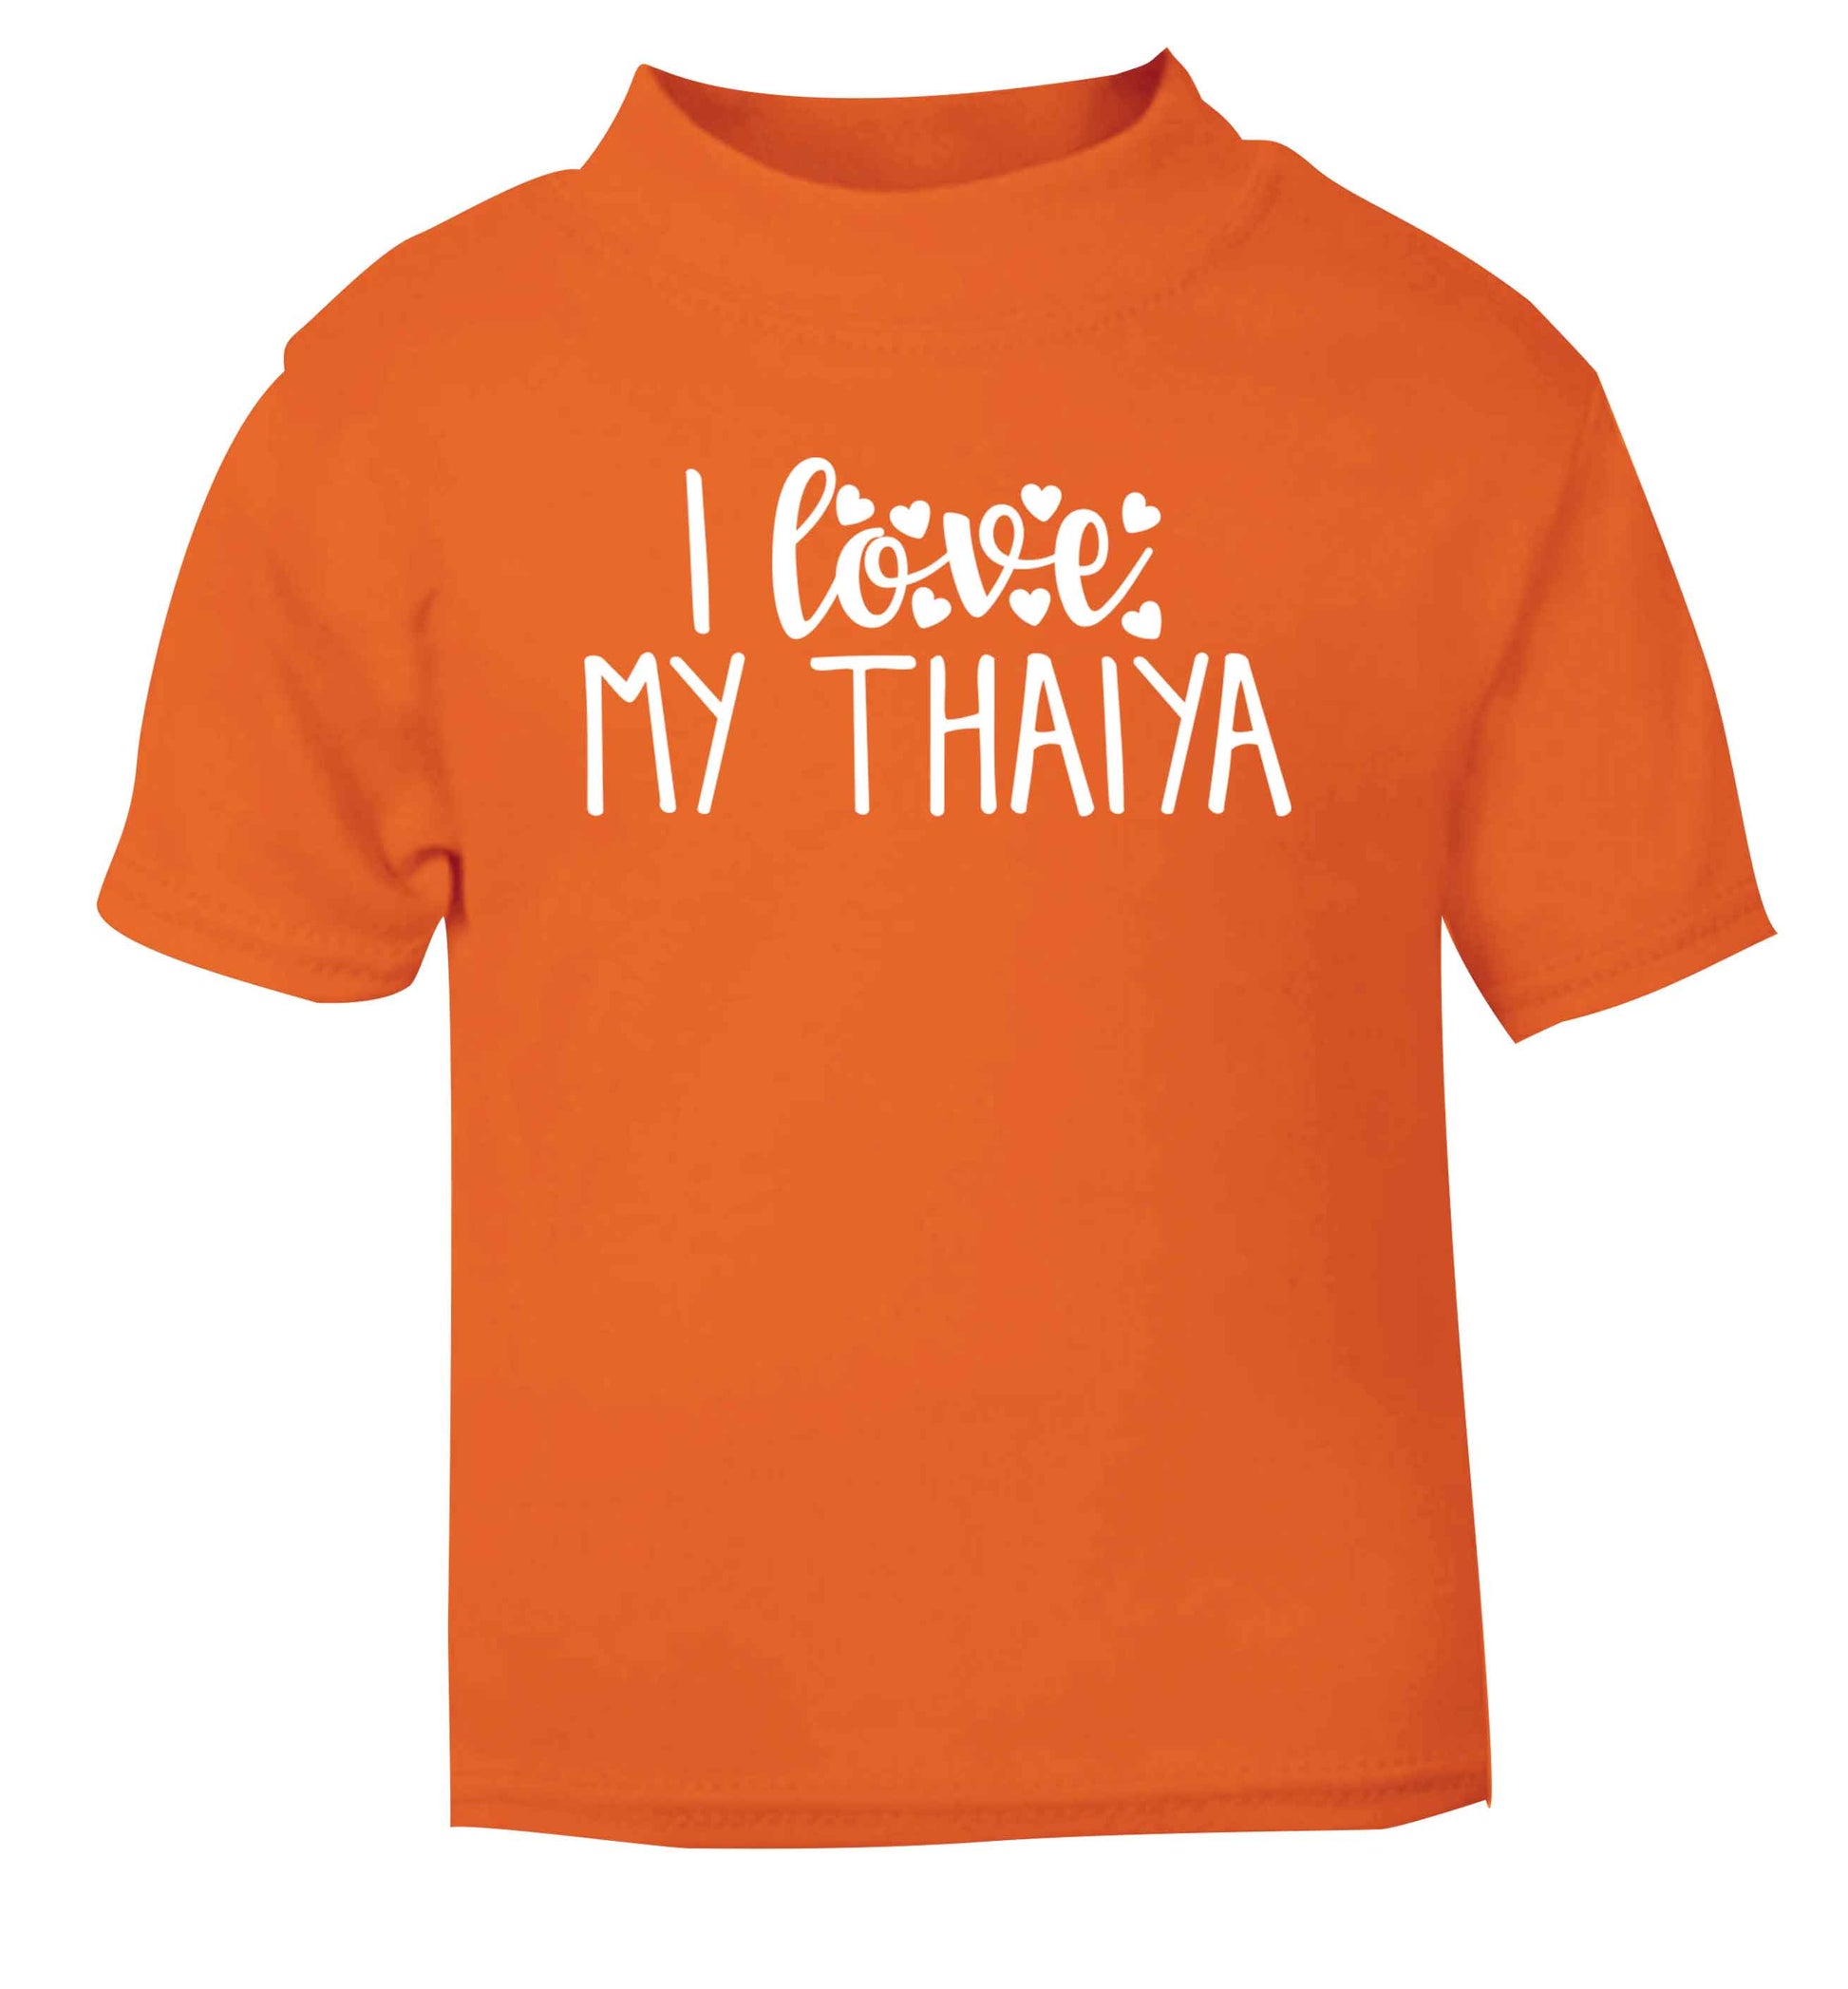 I love my thaiya orange Baby Toddler Tshirt 2 Years